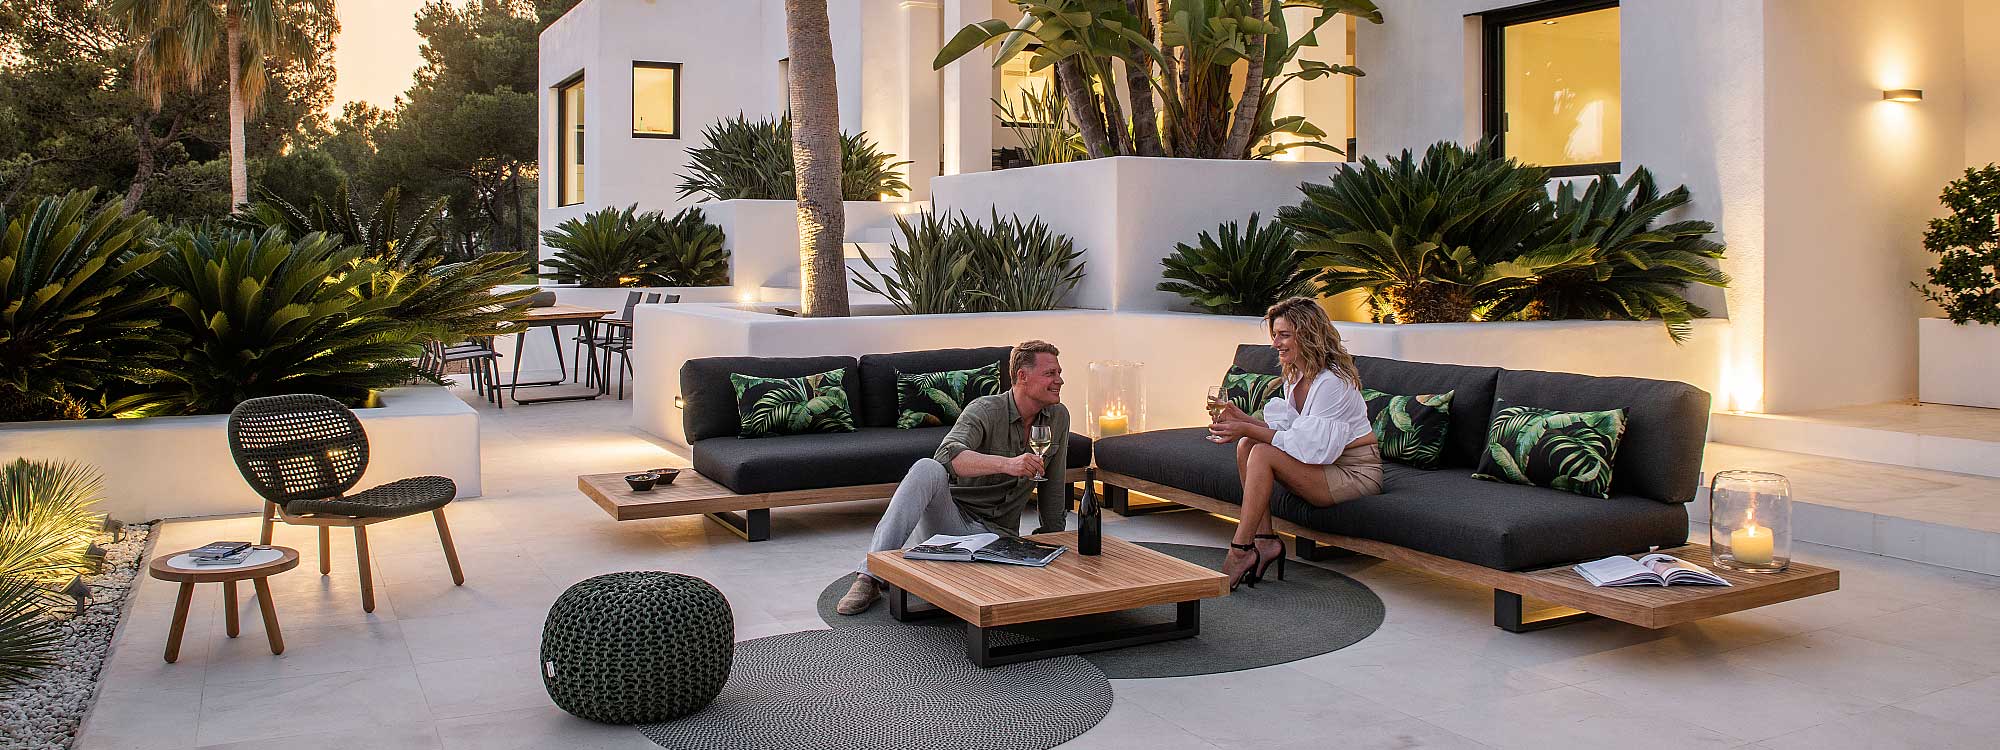 Truro Lounge teak sofa is trendsetting outdoor furniture in luxury garden sofa materials by Jati & Kebon sustainable garden furniture company